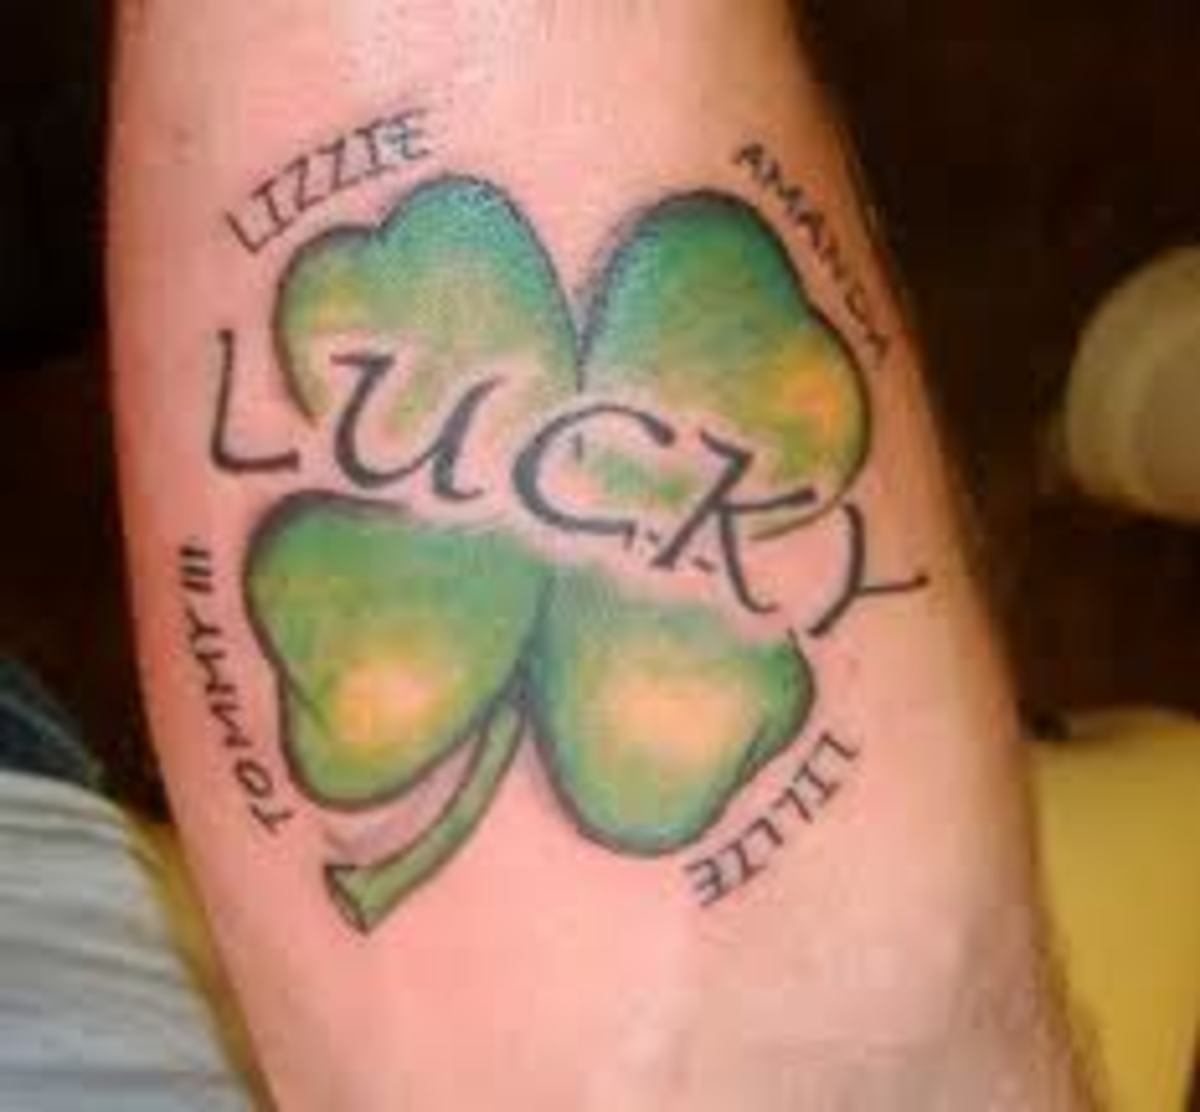 lucky-tattoo-designs-lucky-tattoo-symbols-and-ideas